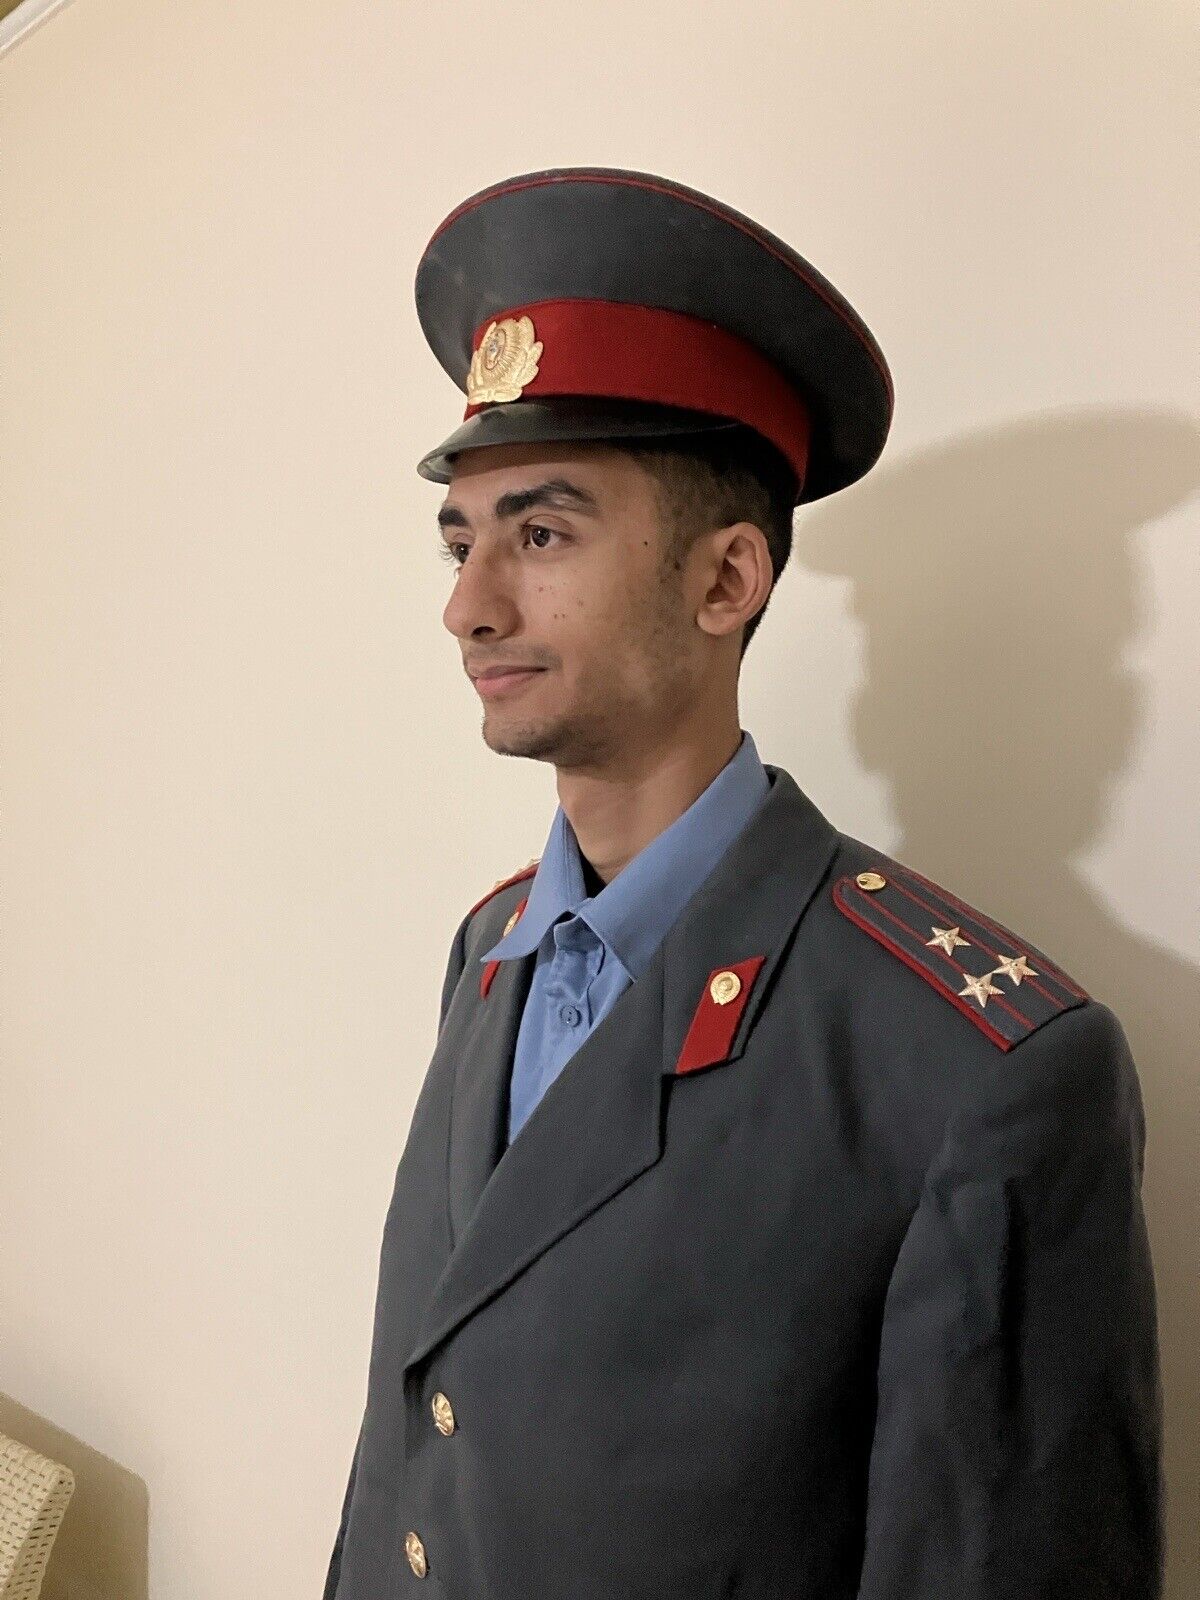 Soviet Union Policeman Uniform